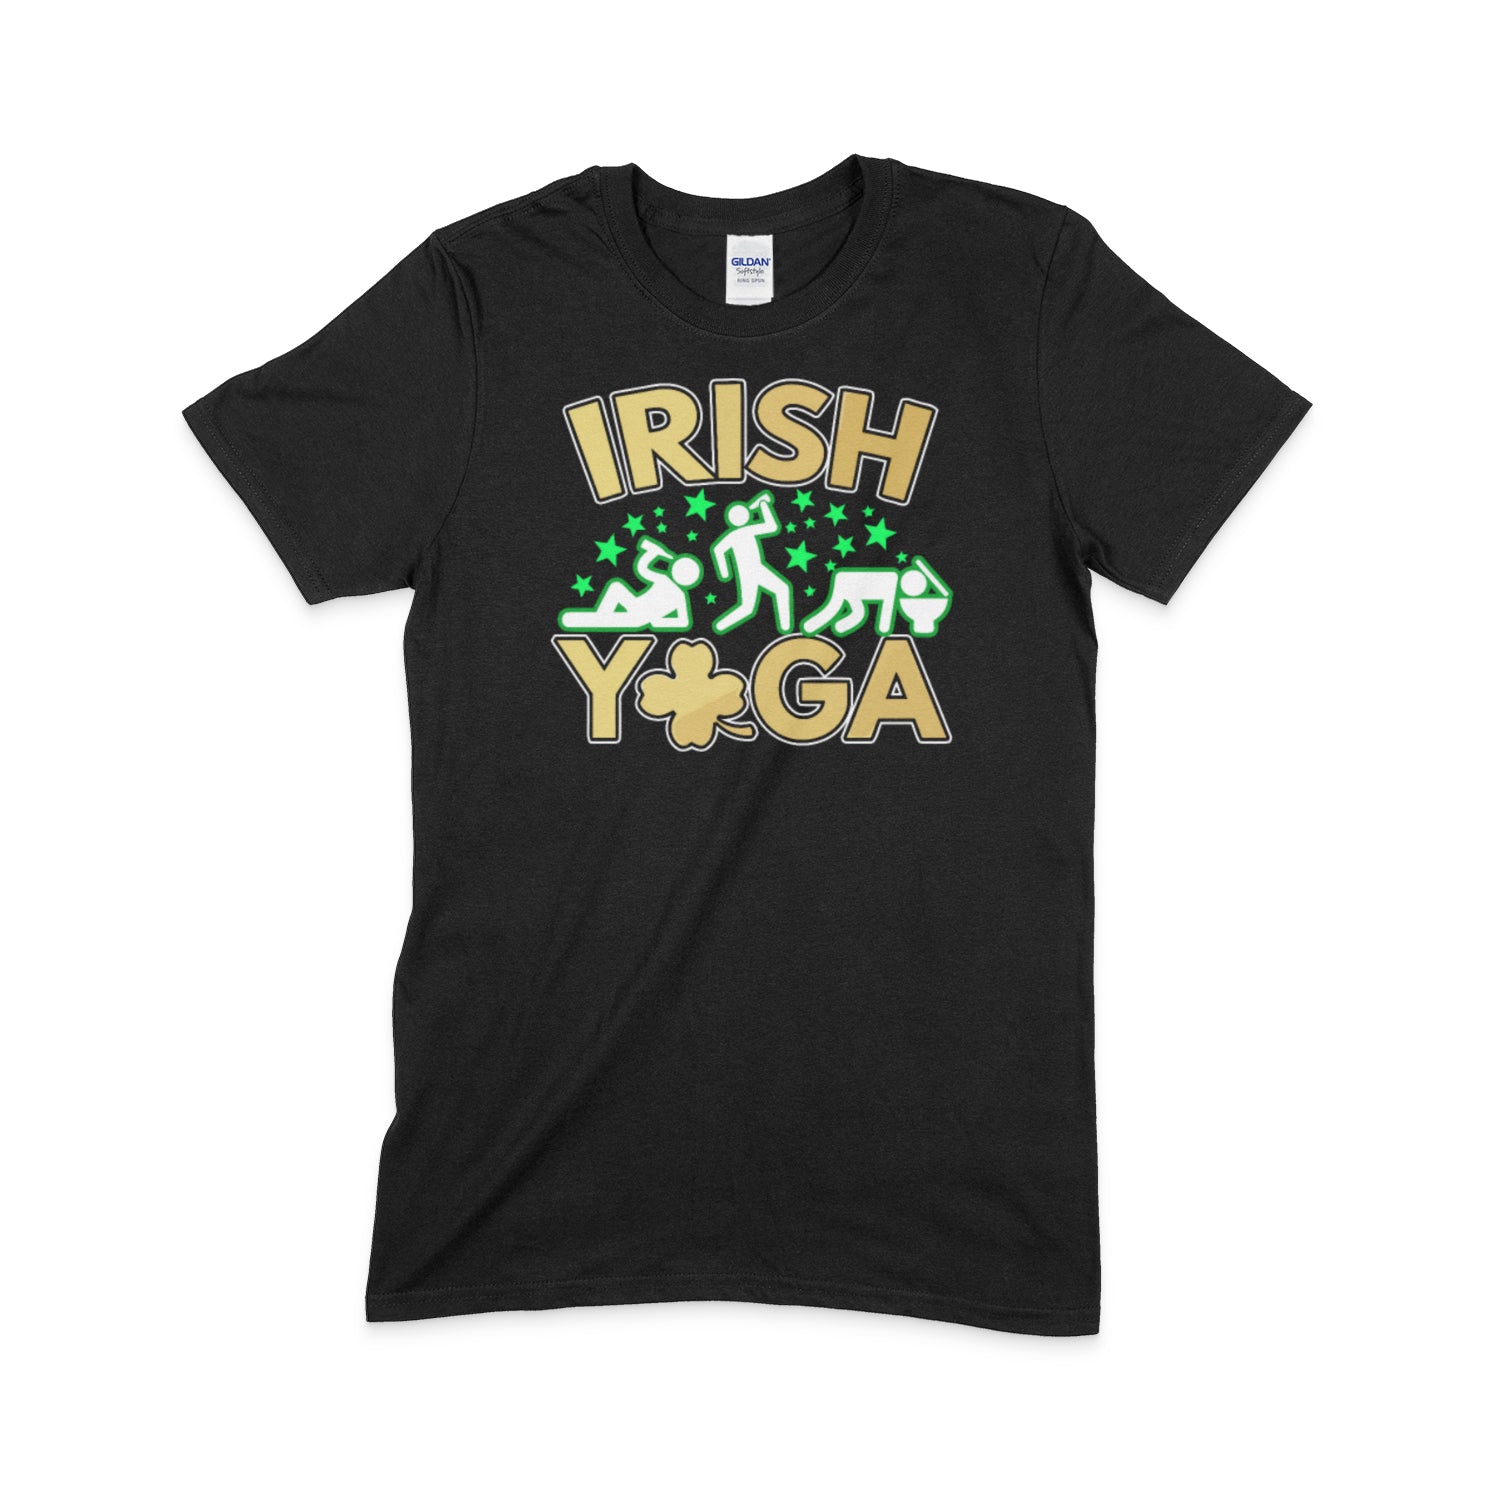 Irish Yoga New T Shirt, S M L XL 2X 3X 4X 5X, St Paddys Day Drinking Fun -   Canada